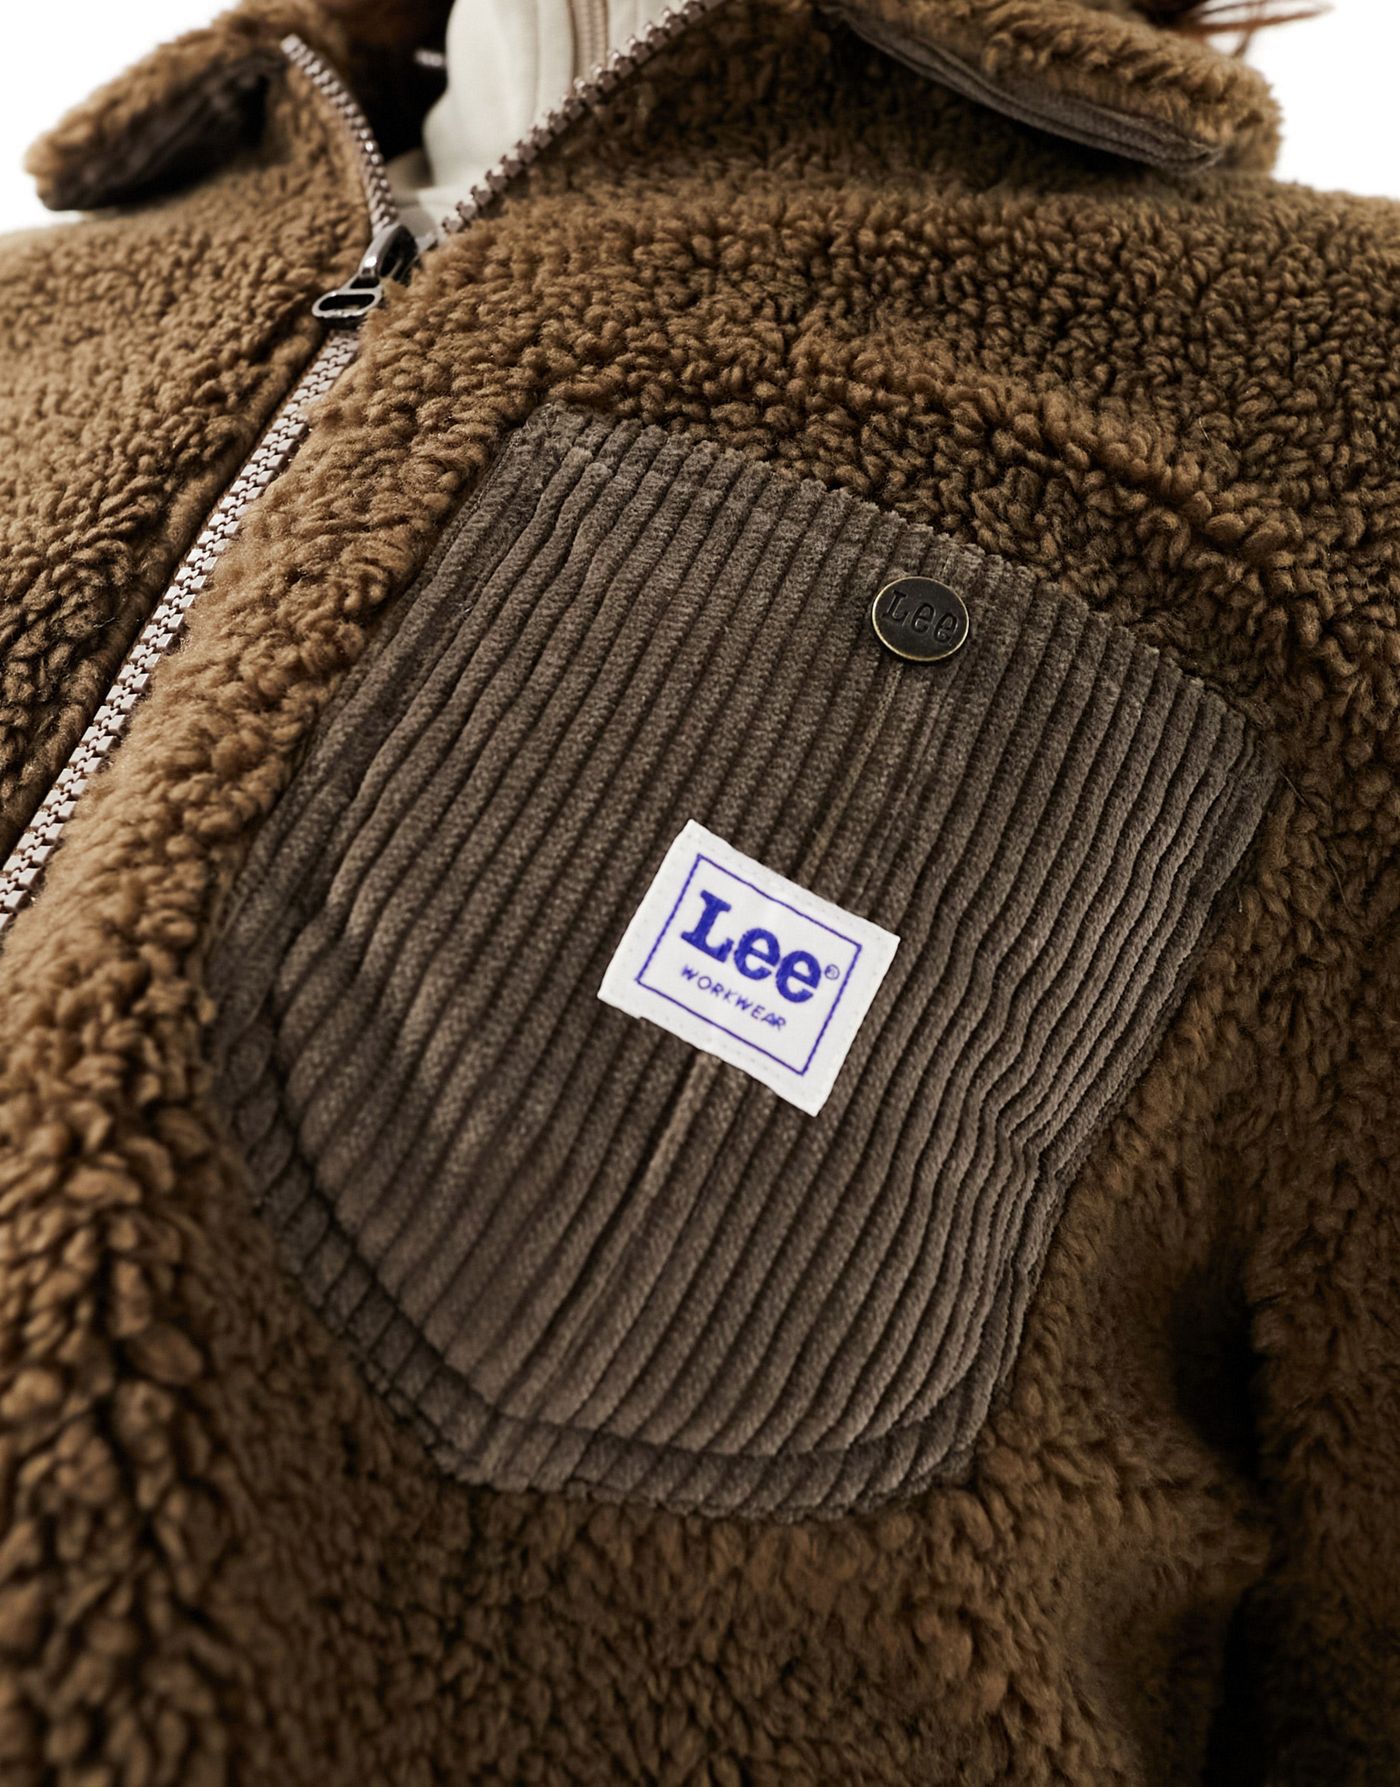 Lee borg sherpa harrington jacket in brown